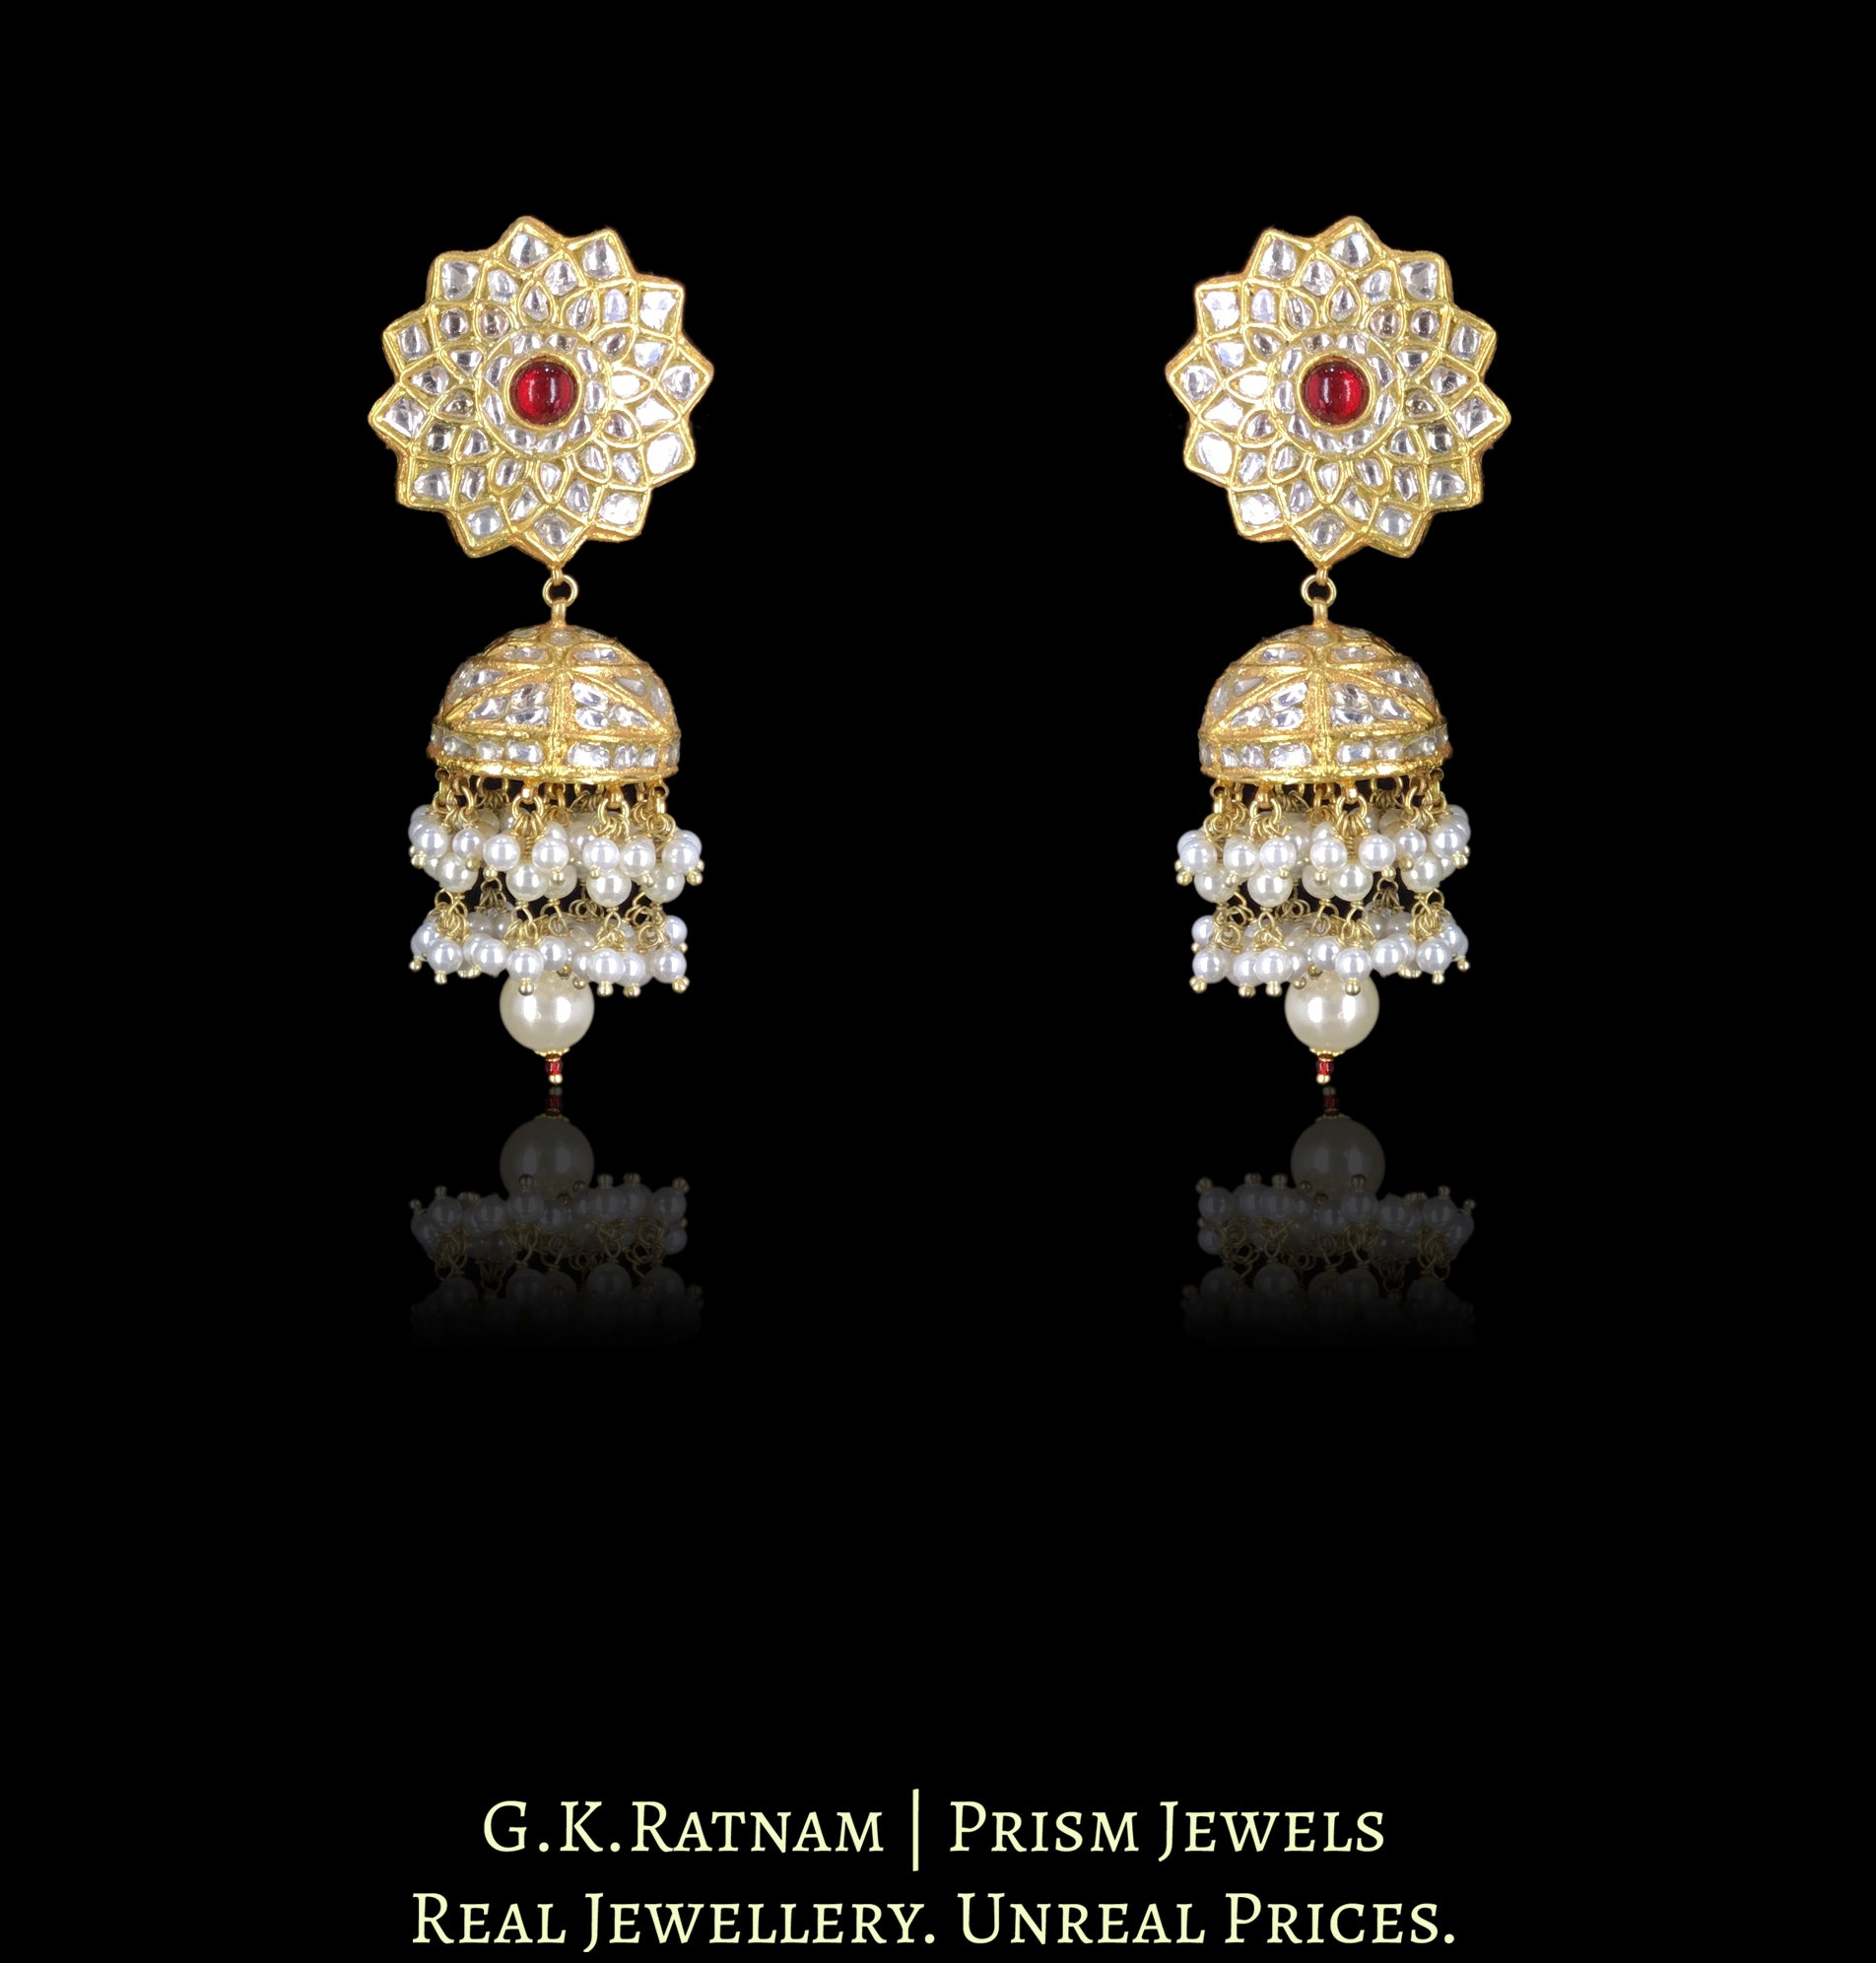 23k Gold and Diamond Polki Choker Necklace Set with ruby-center Starry Motifs